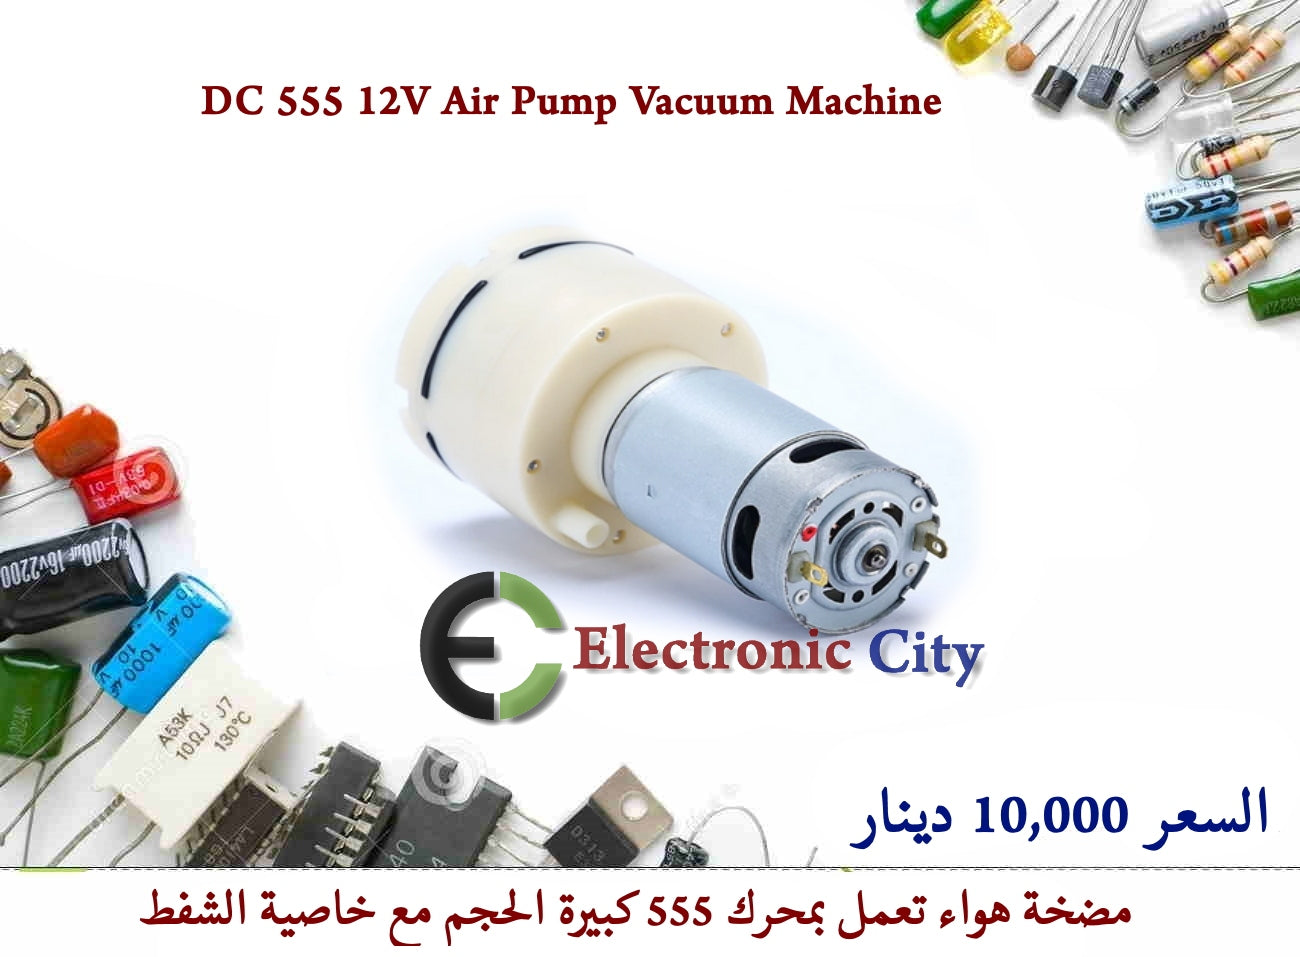 DC 555 12V Air Pump Vacuum Machine